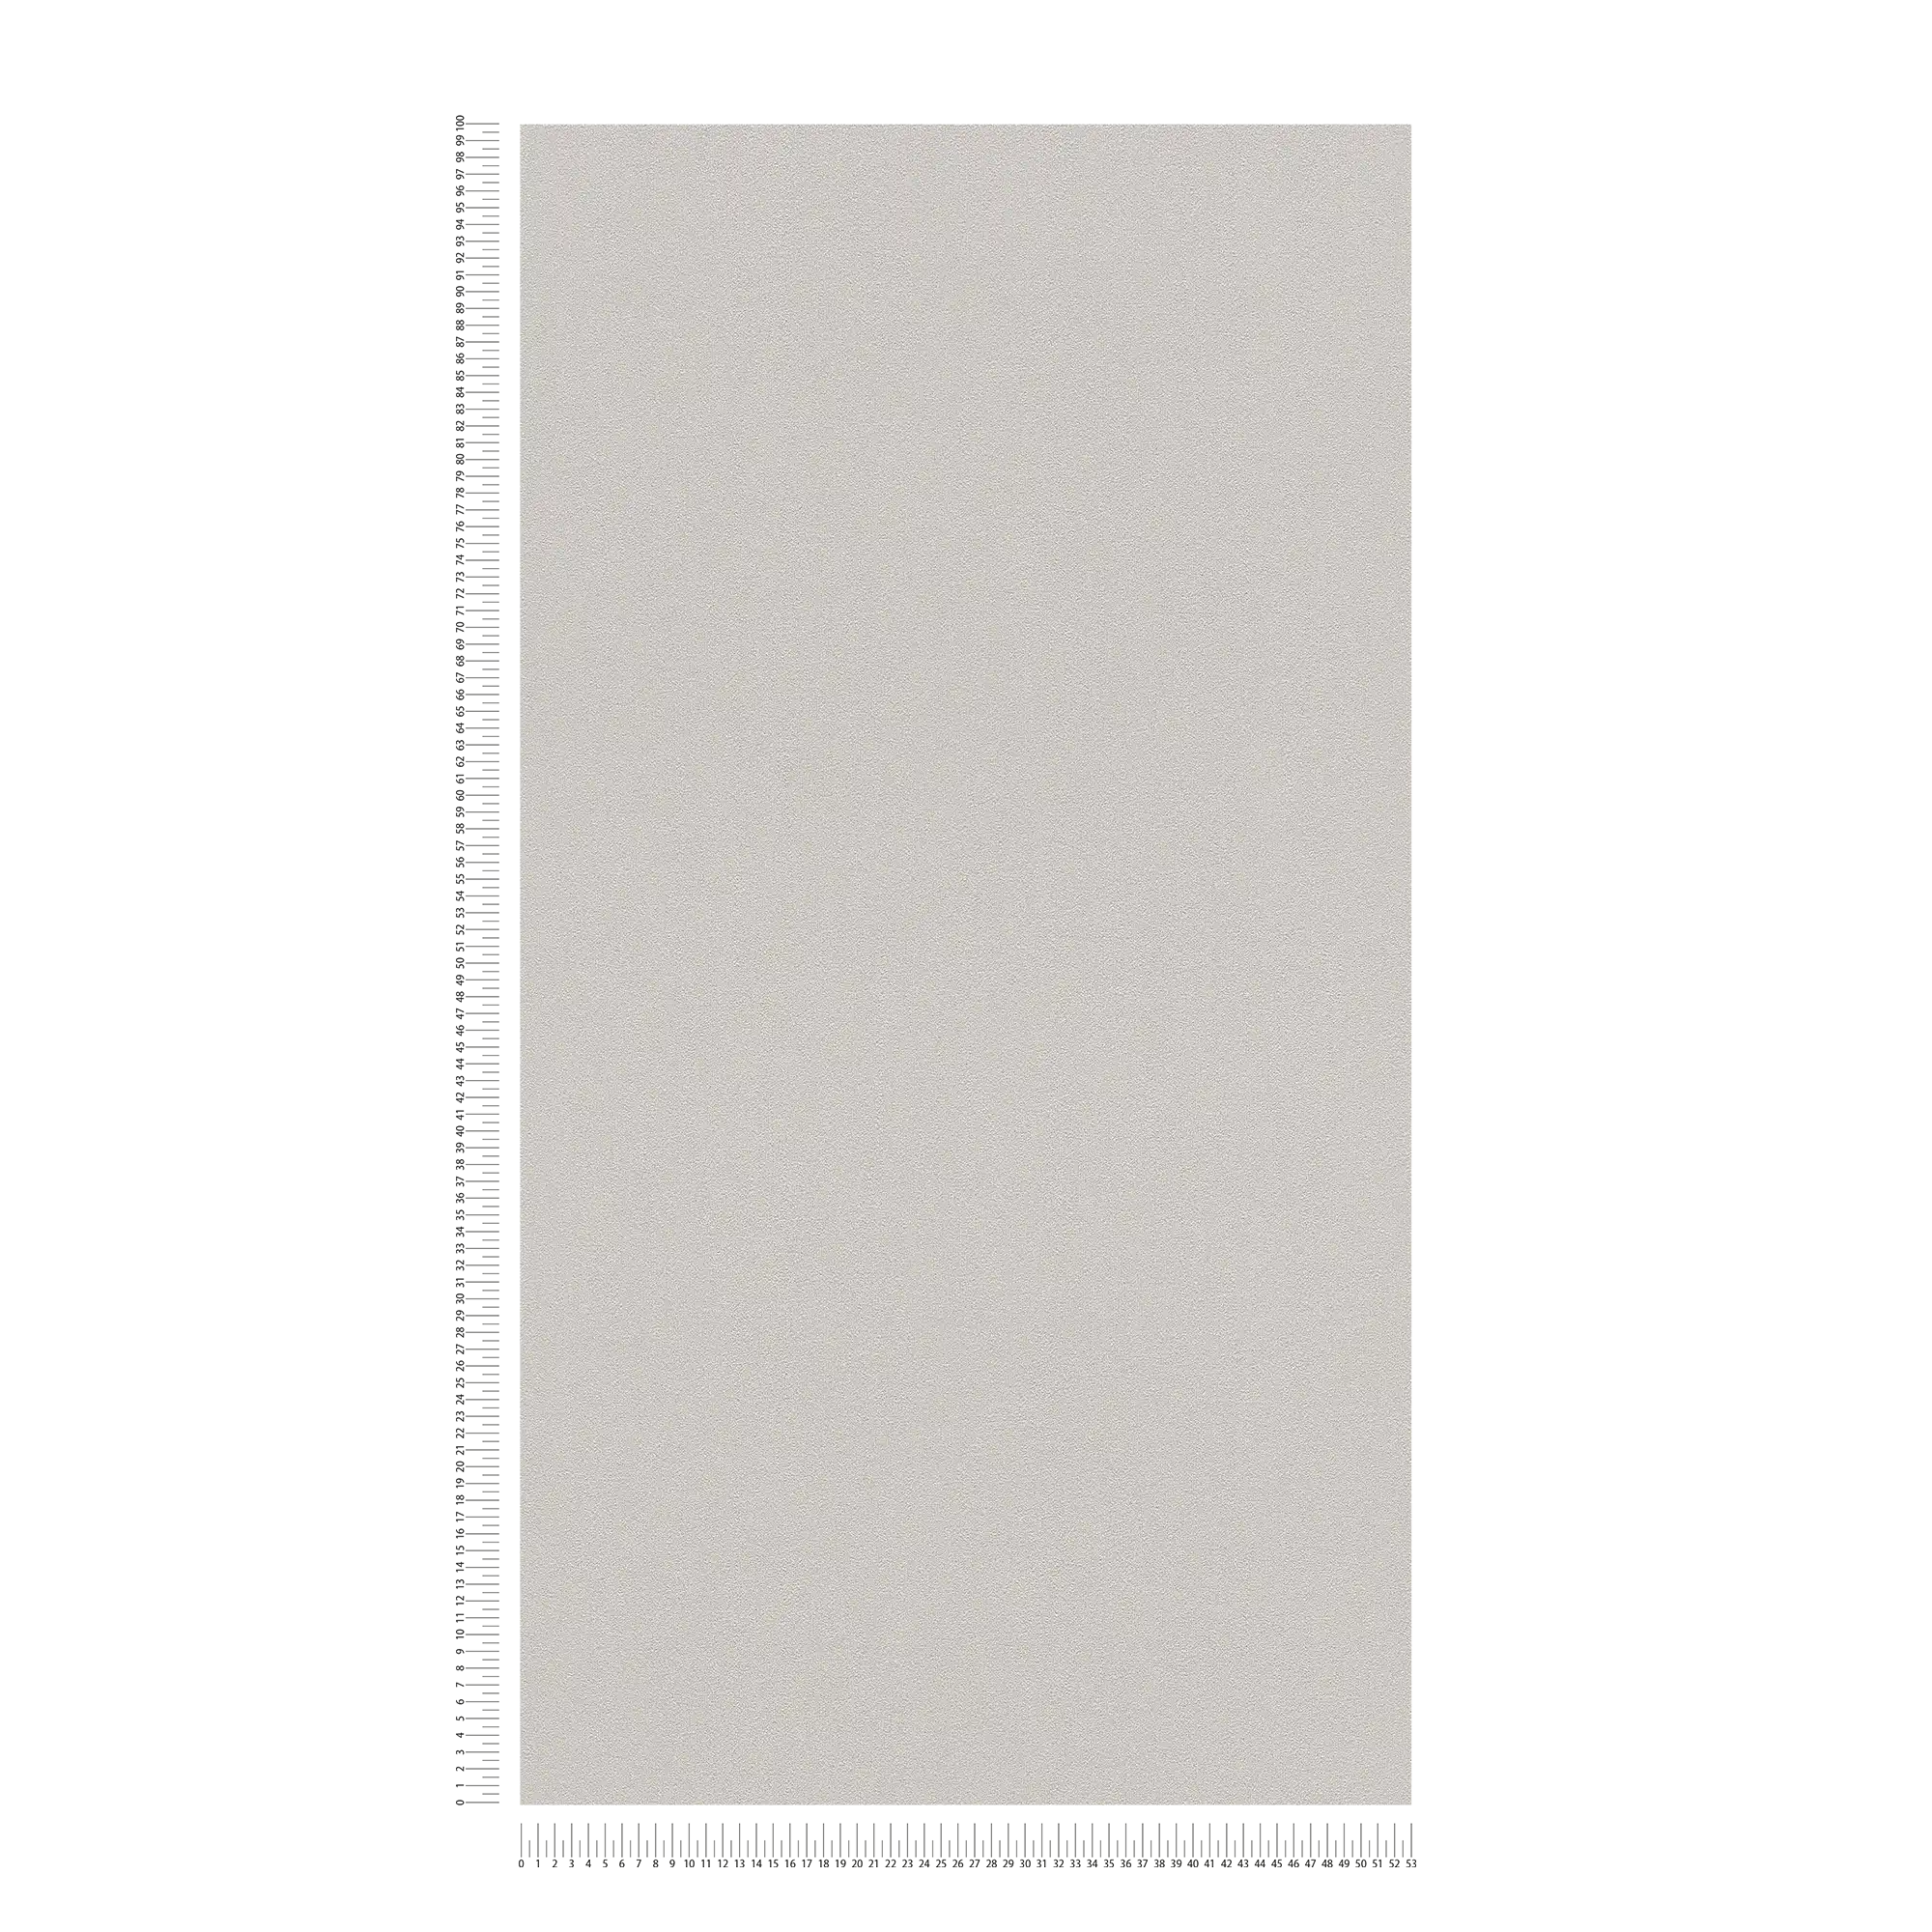             Wallpaper Karl LAGERFELD monochrome & embossed texture - grey
        